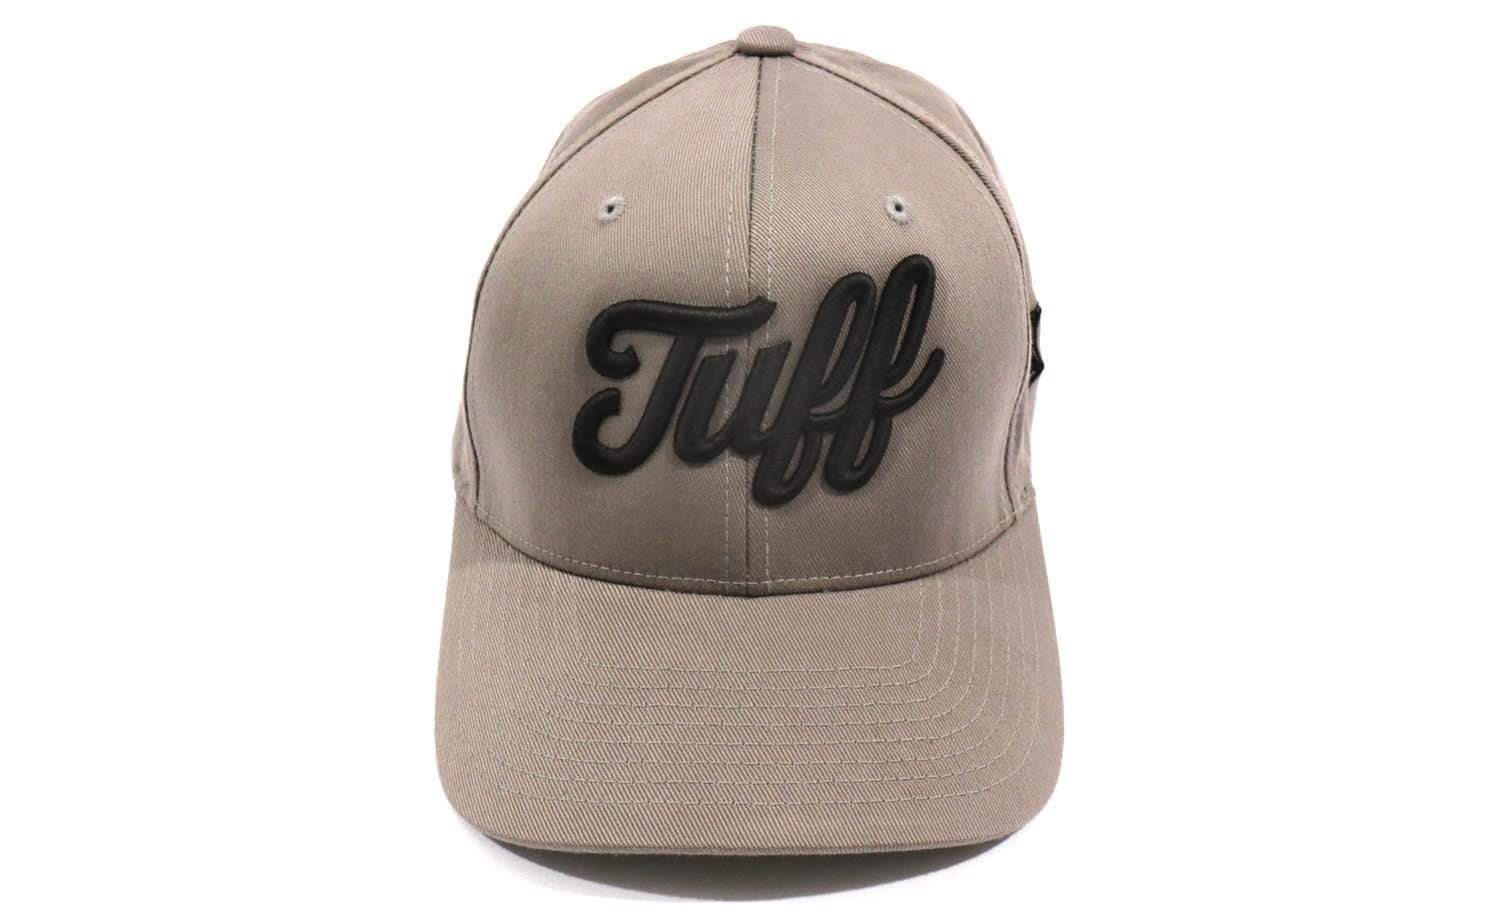 TUFF Script Gray Flexfit Hat S/M (6 3/4"-7 1/4") / Dark Gray TuffWraps.com